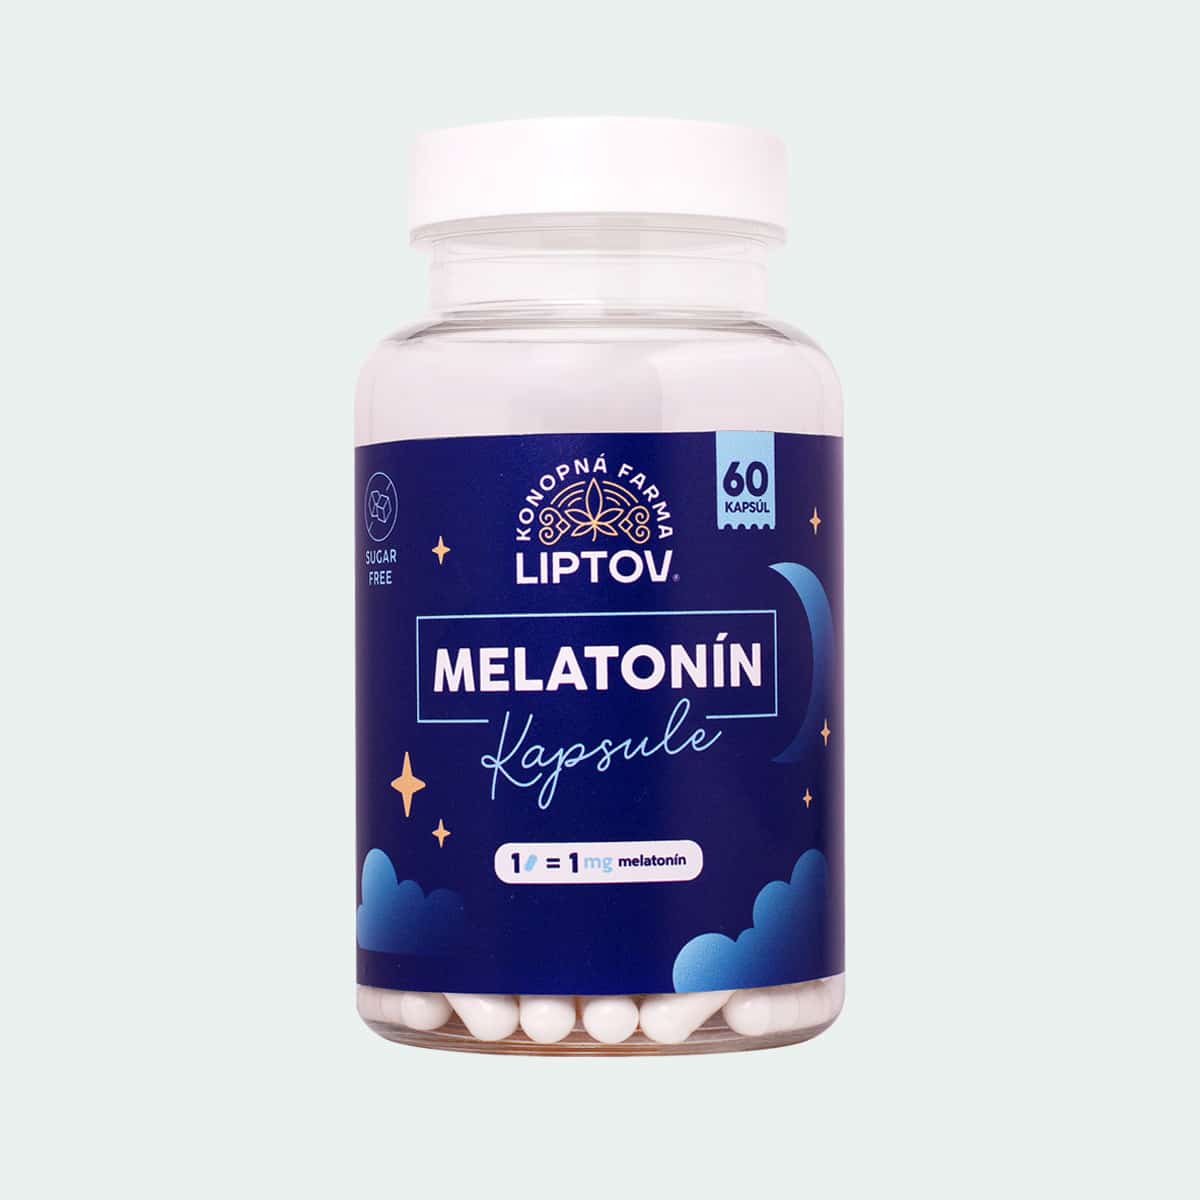 Melatonín kapsule